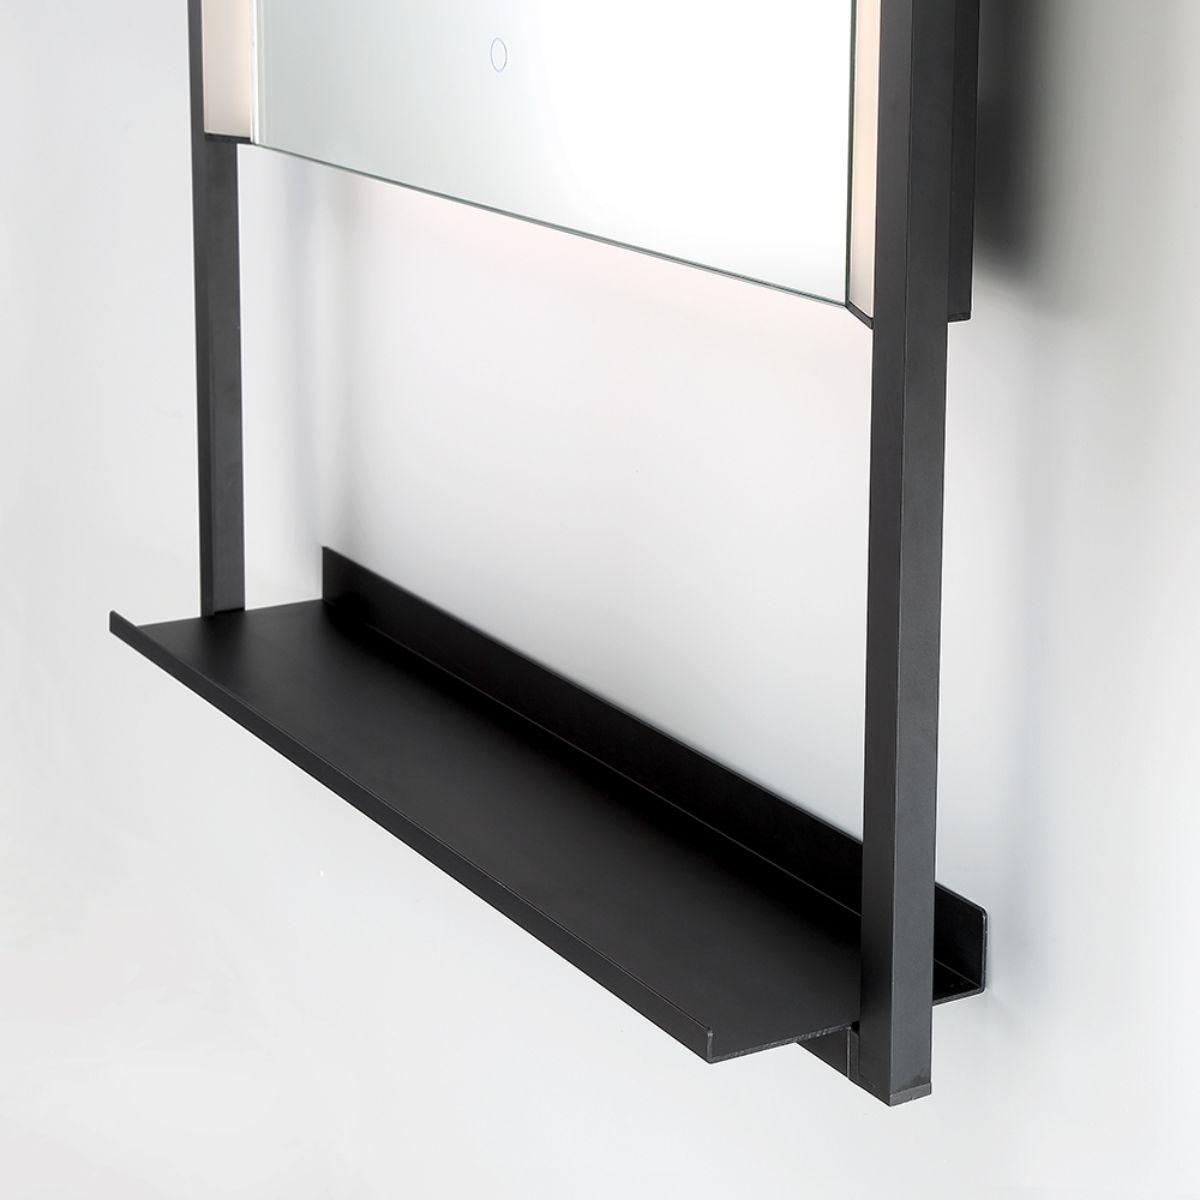 Sayora 20 In x 32 In. Black LED Wall Mirror